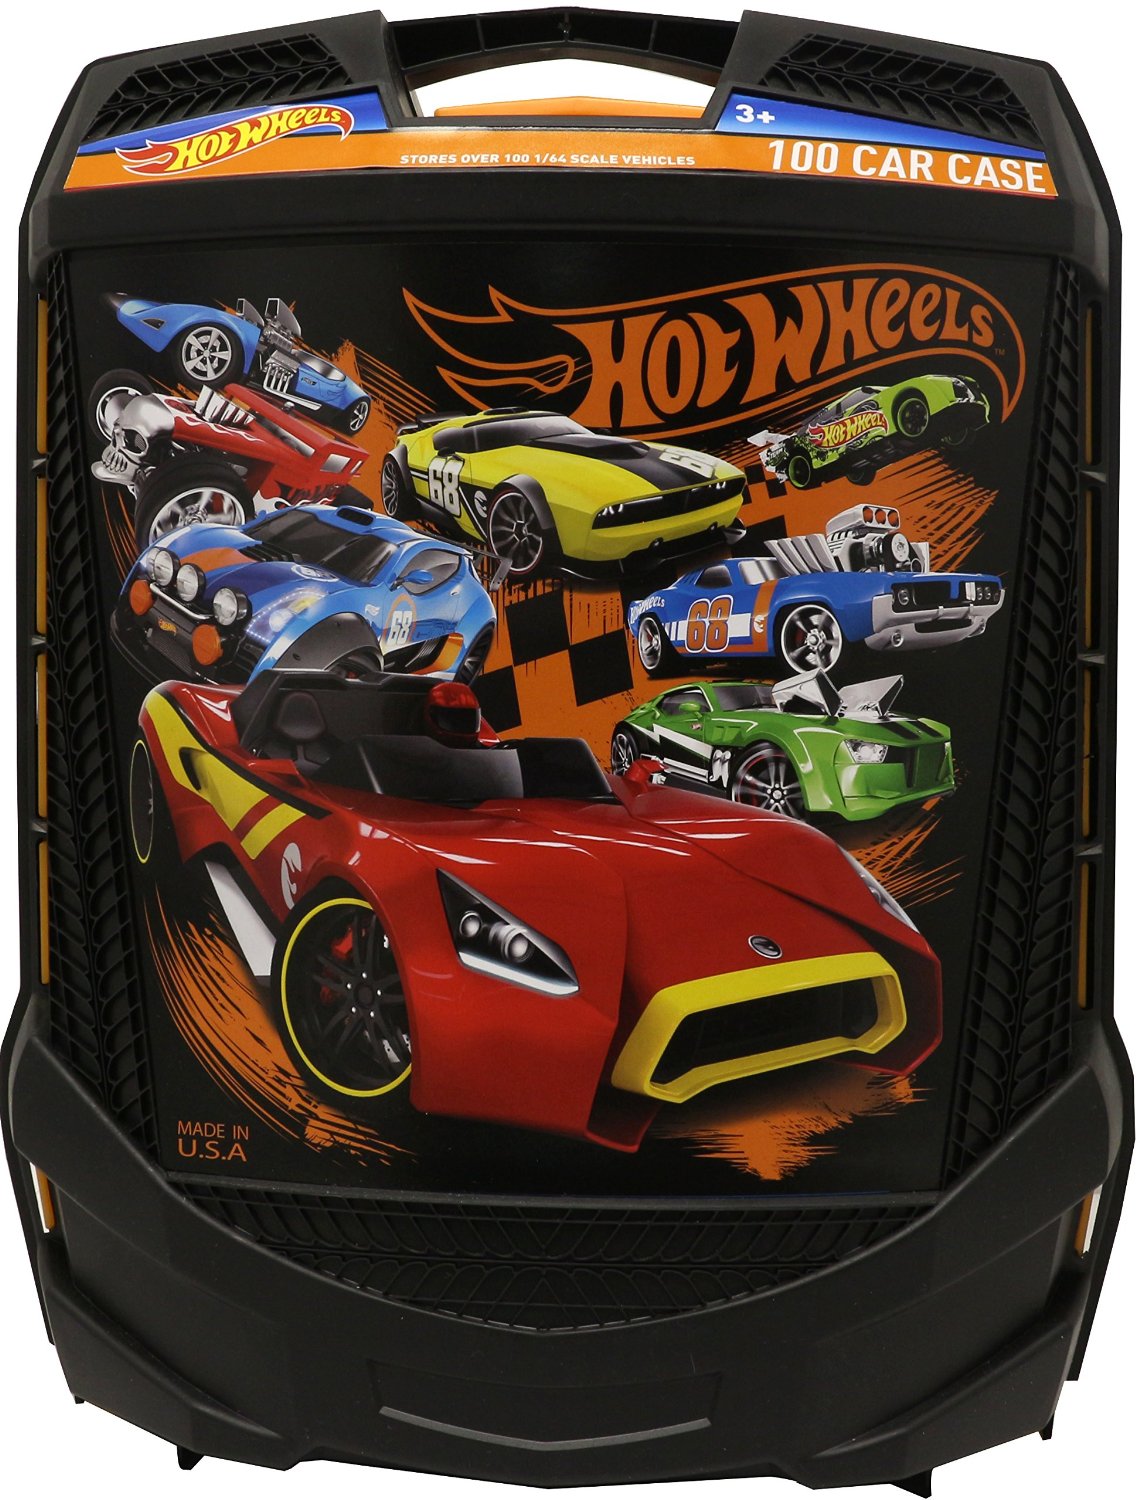 Hot Wheels 100 Car Case – Just $13.59!